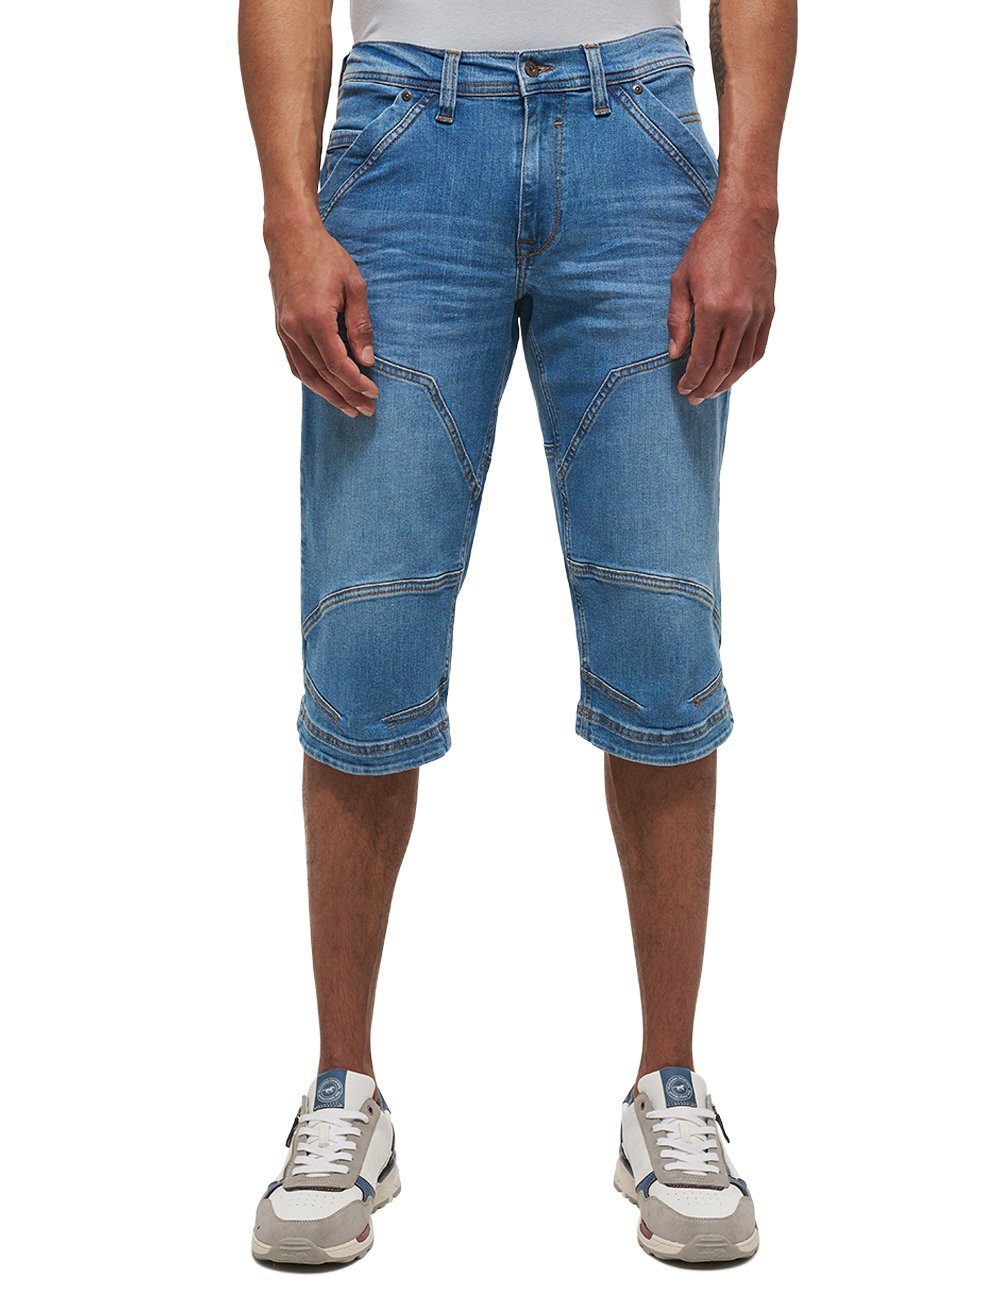 MUSTANG Jeansshorts Style Fremont Shorts blau-5000583